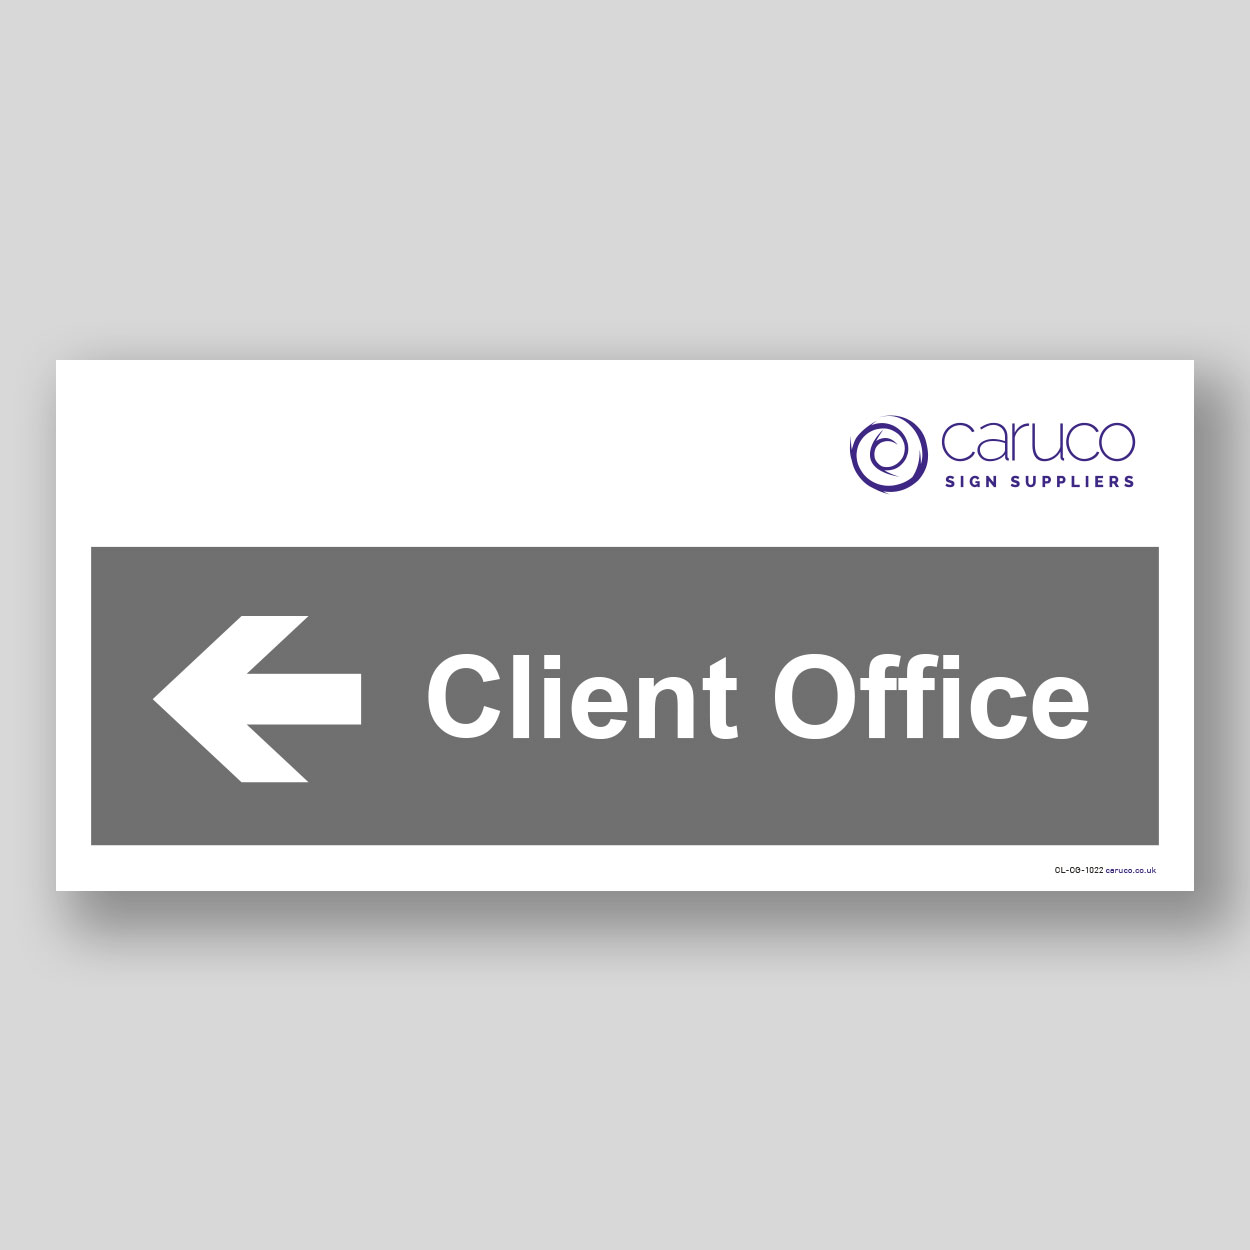 CL-CD-1022 Client office with left arrow